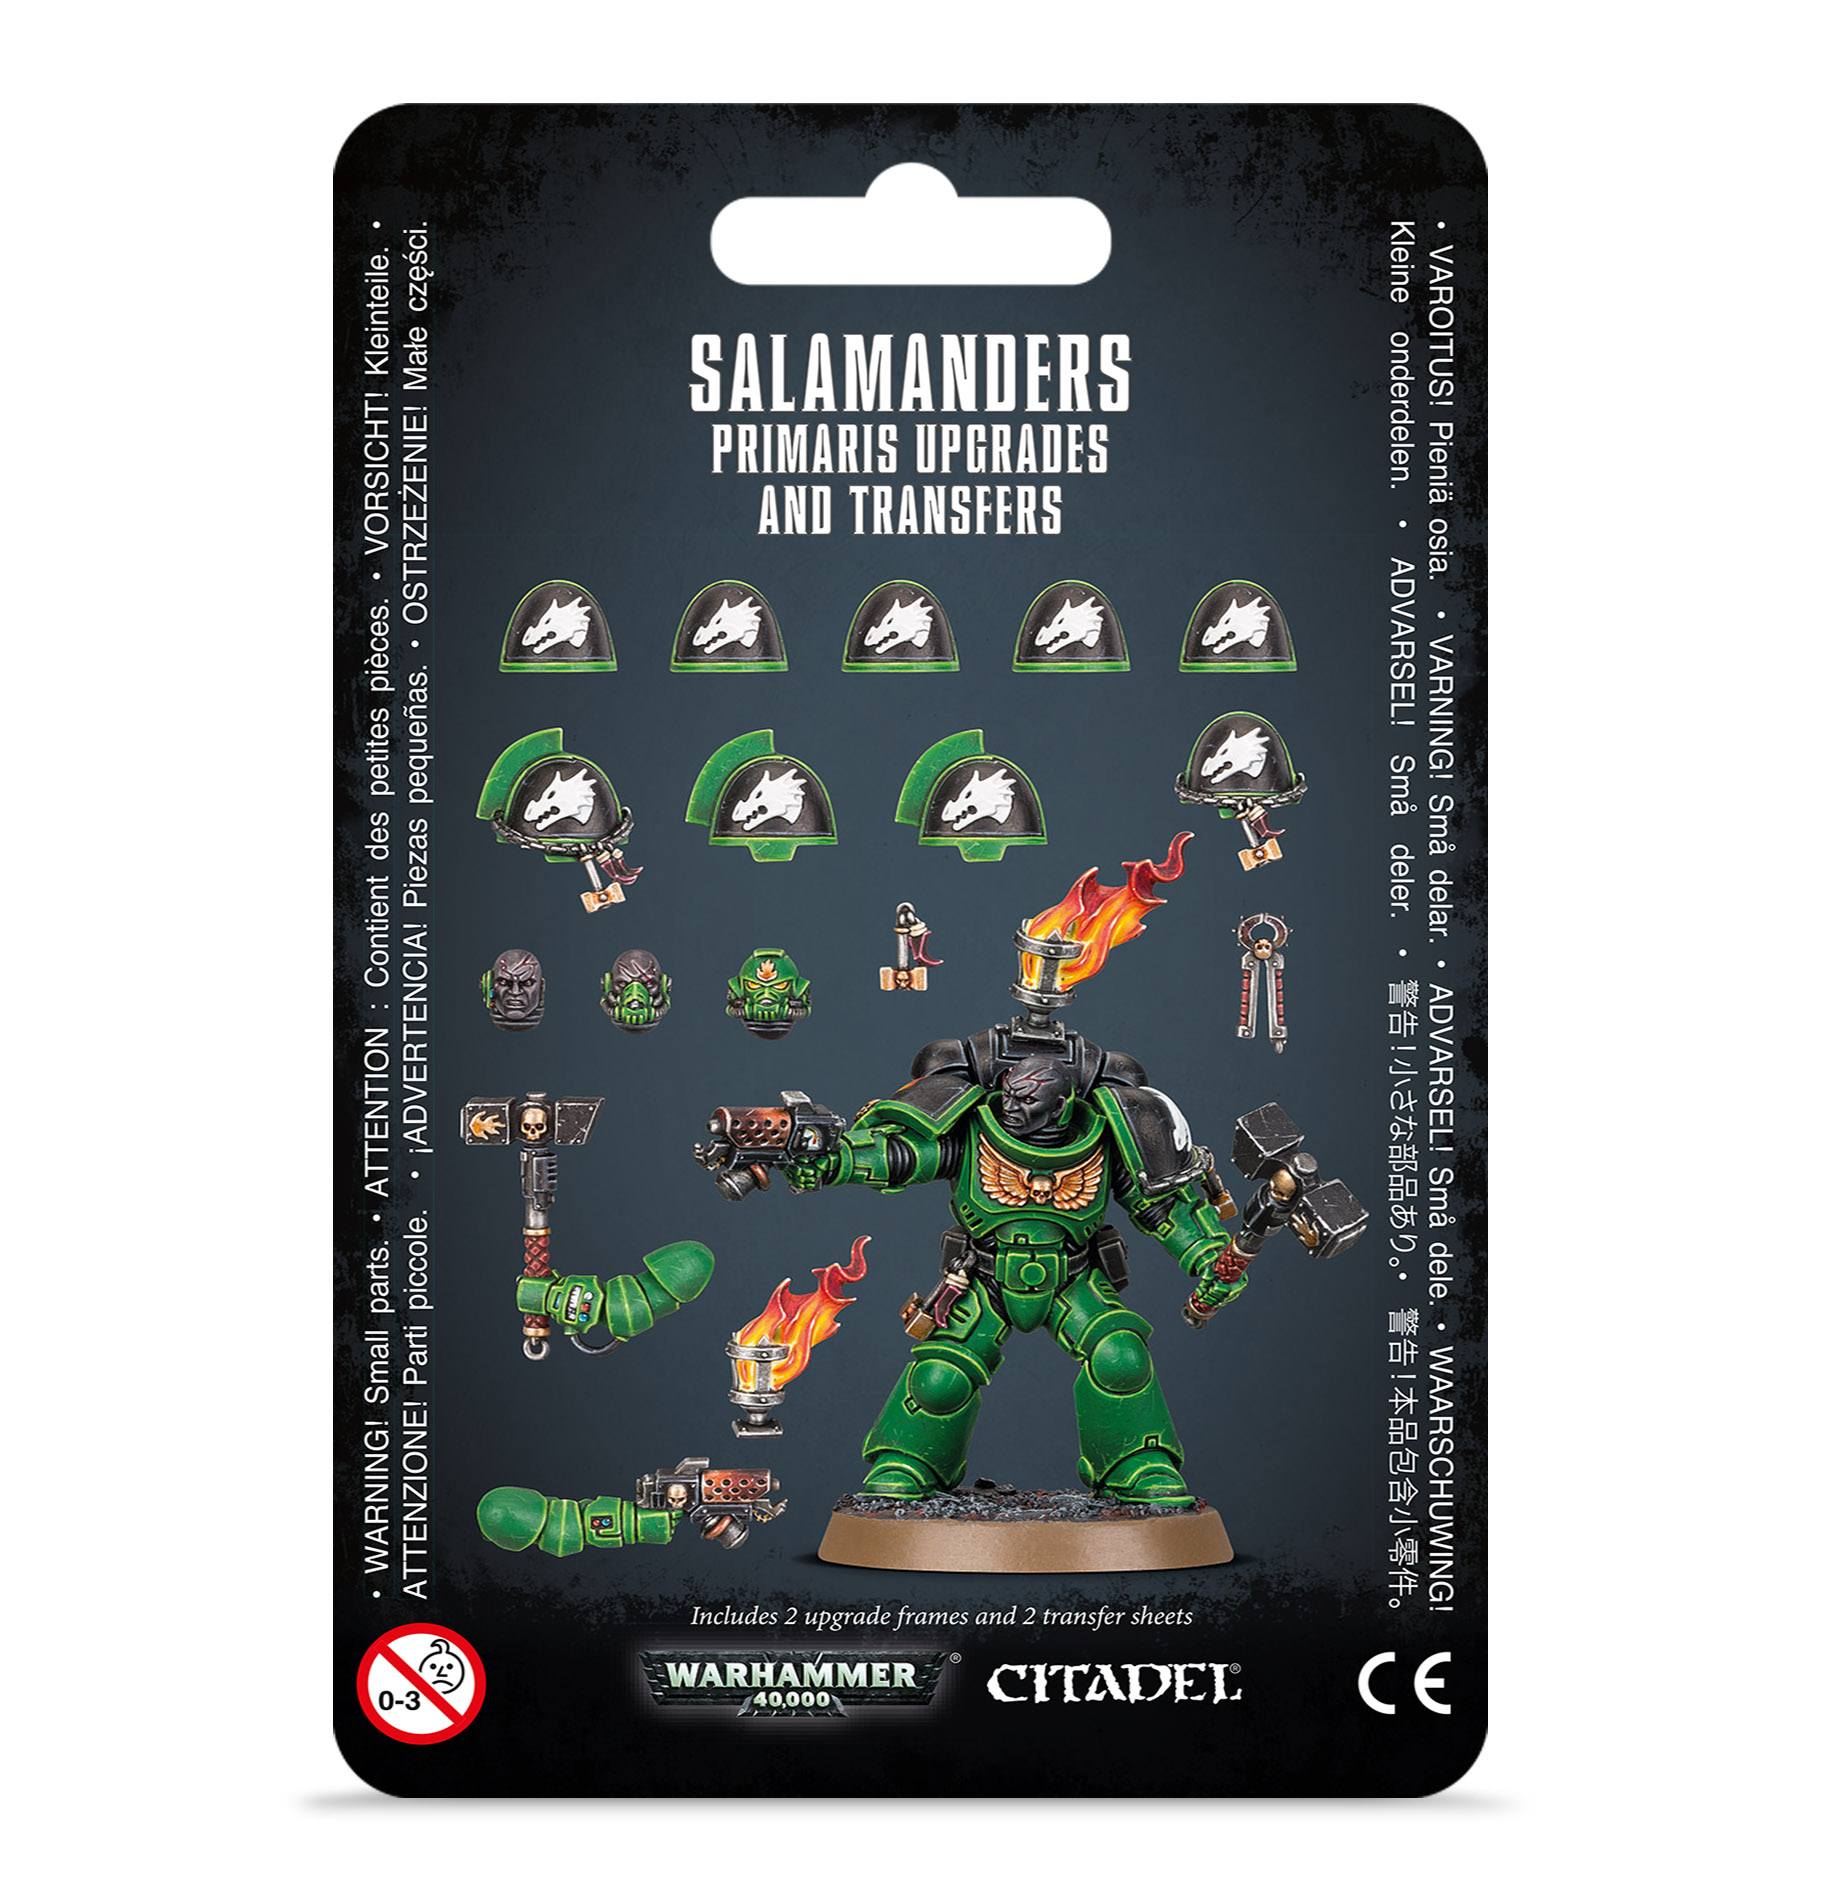 Salamanders Primaris Upgrades and Transfers (55-16)